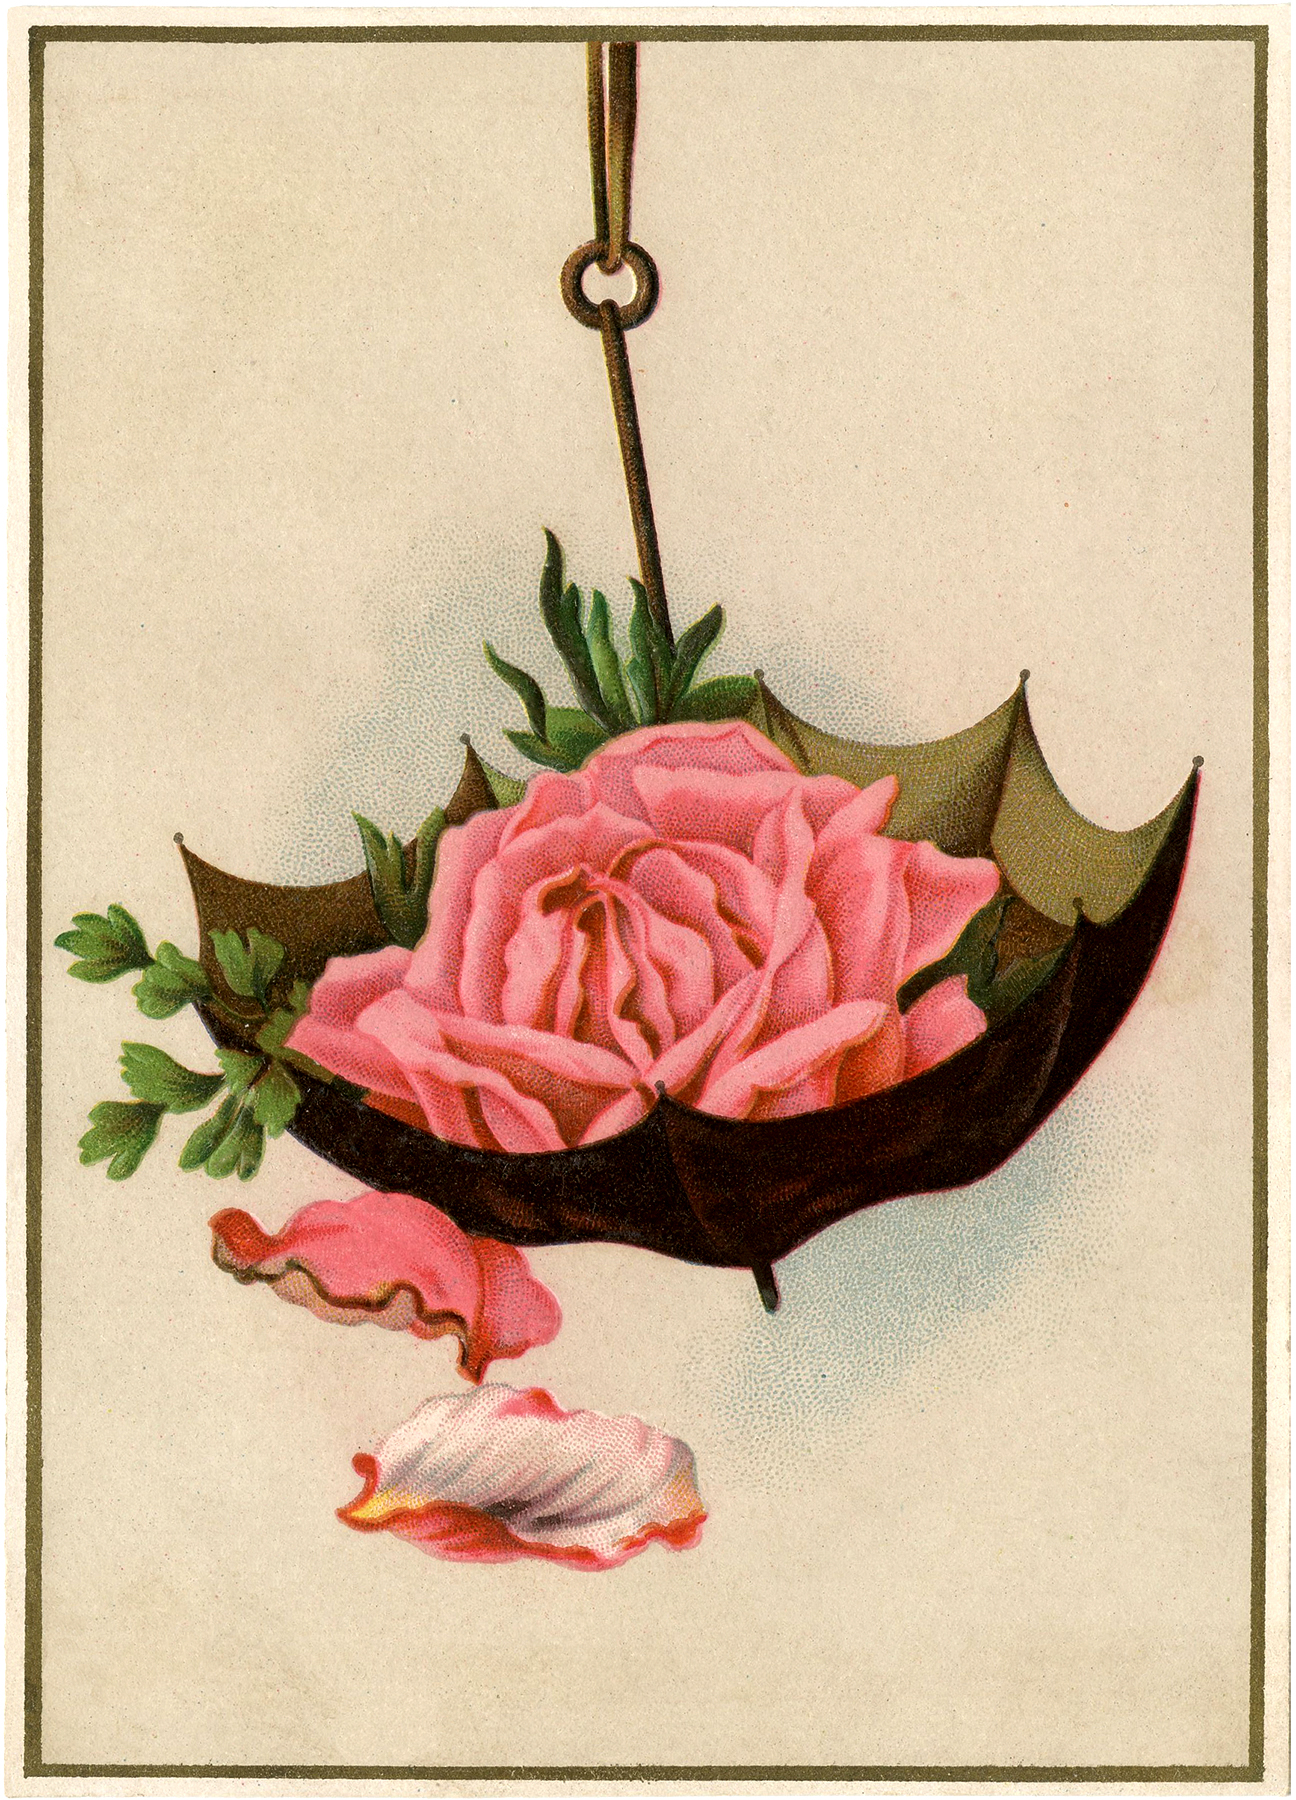 Shabby Pink Rose Umbrella Image! - The Graphics Fairy1296 x 1800